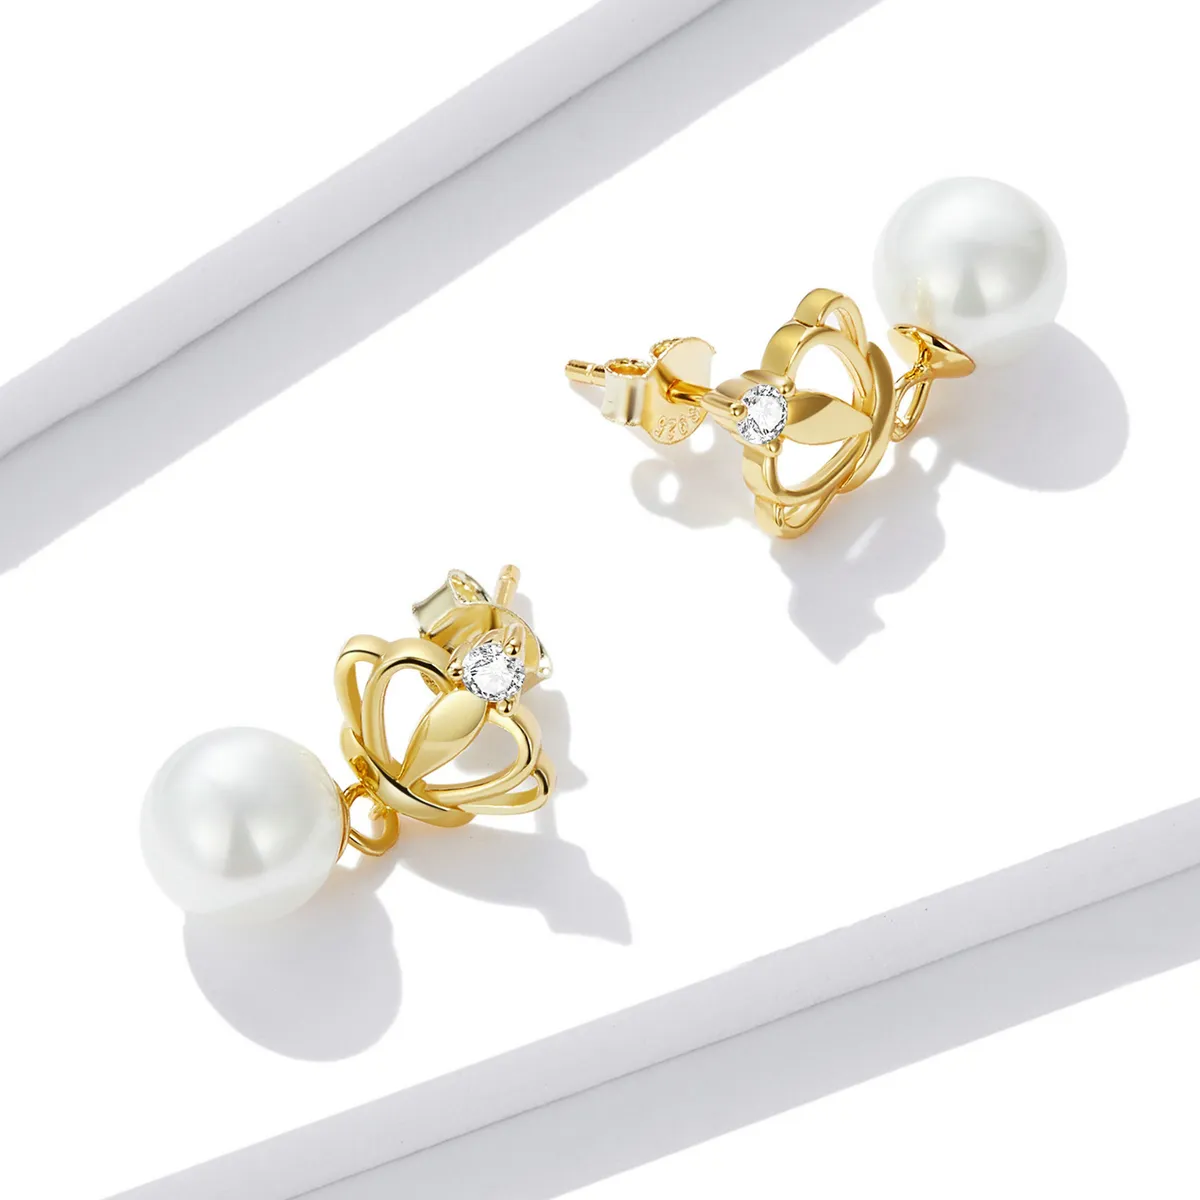 Pandora Style Crown Shell Beads Stud Earrings - BSE549